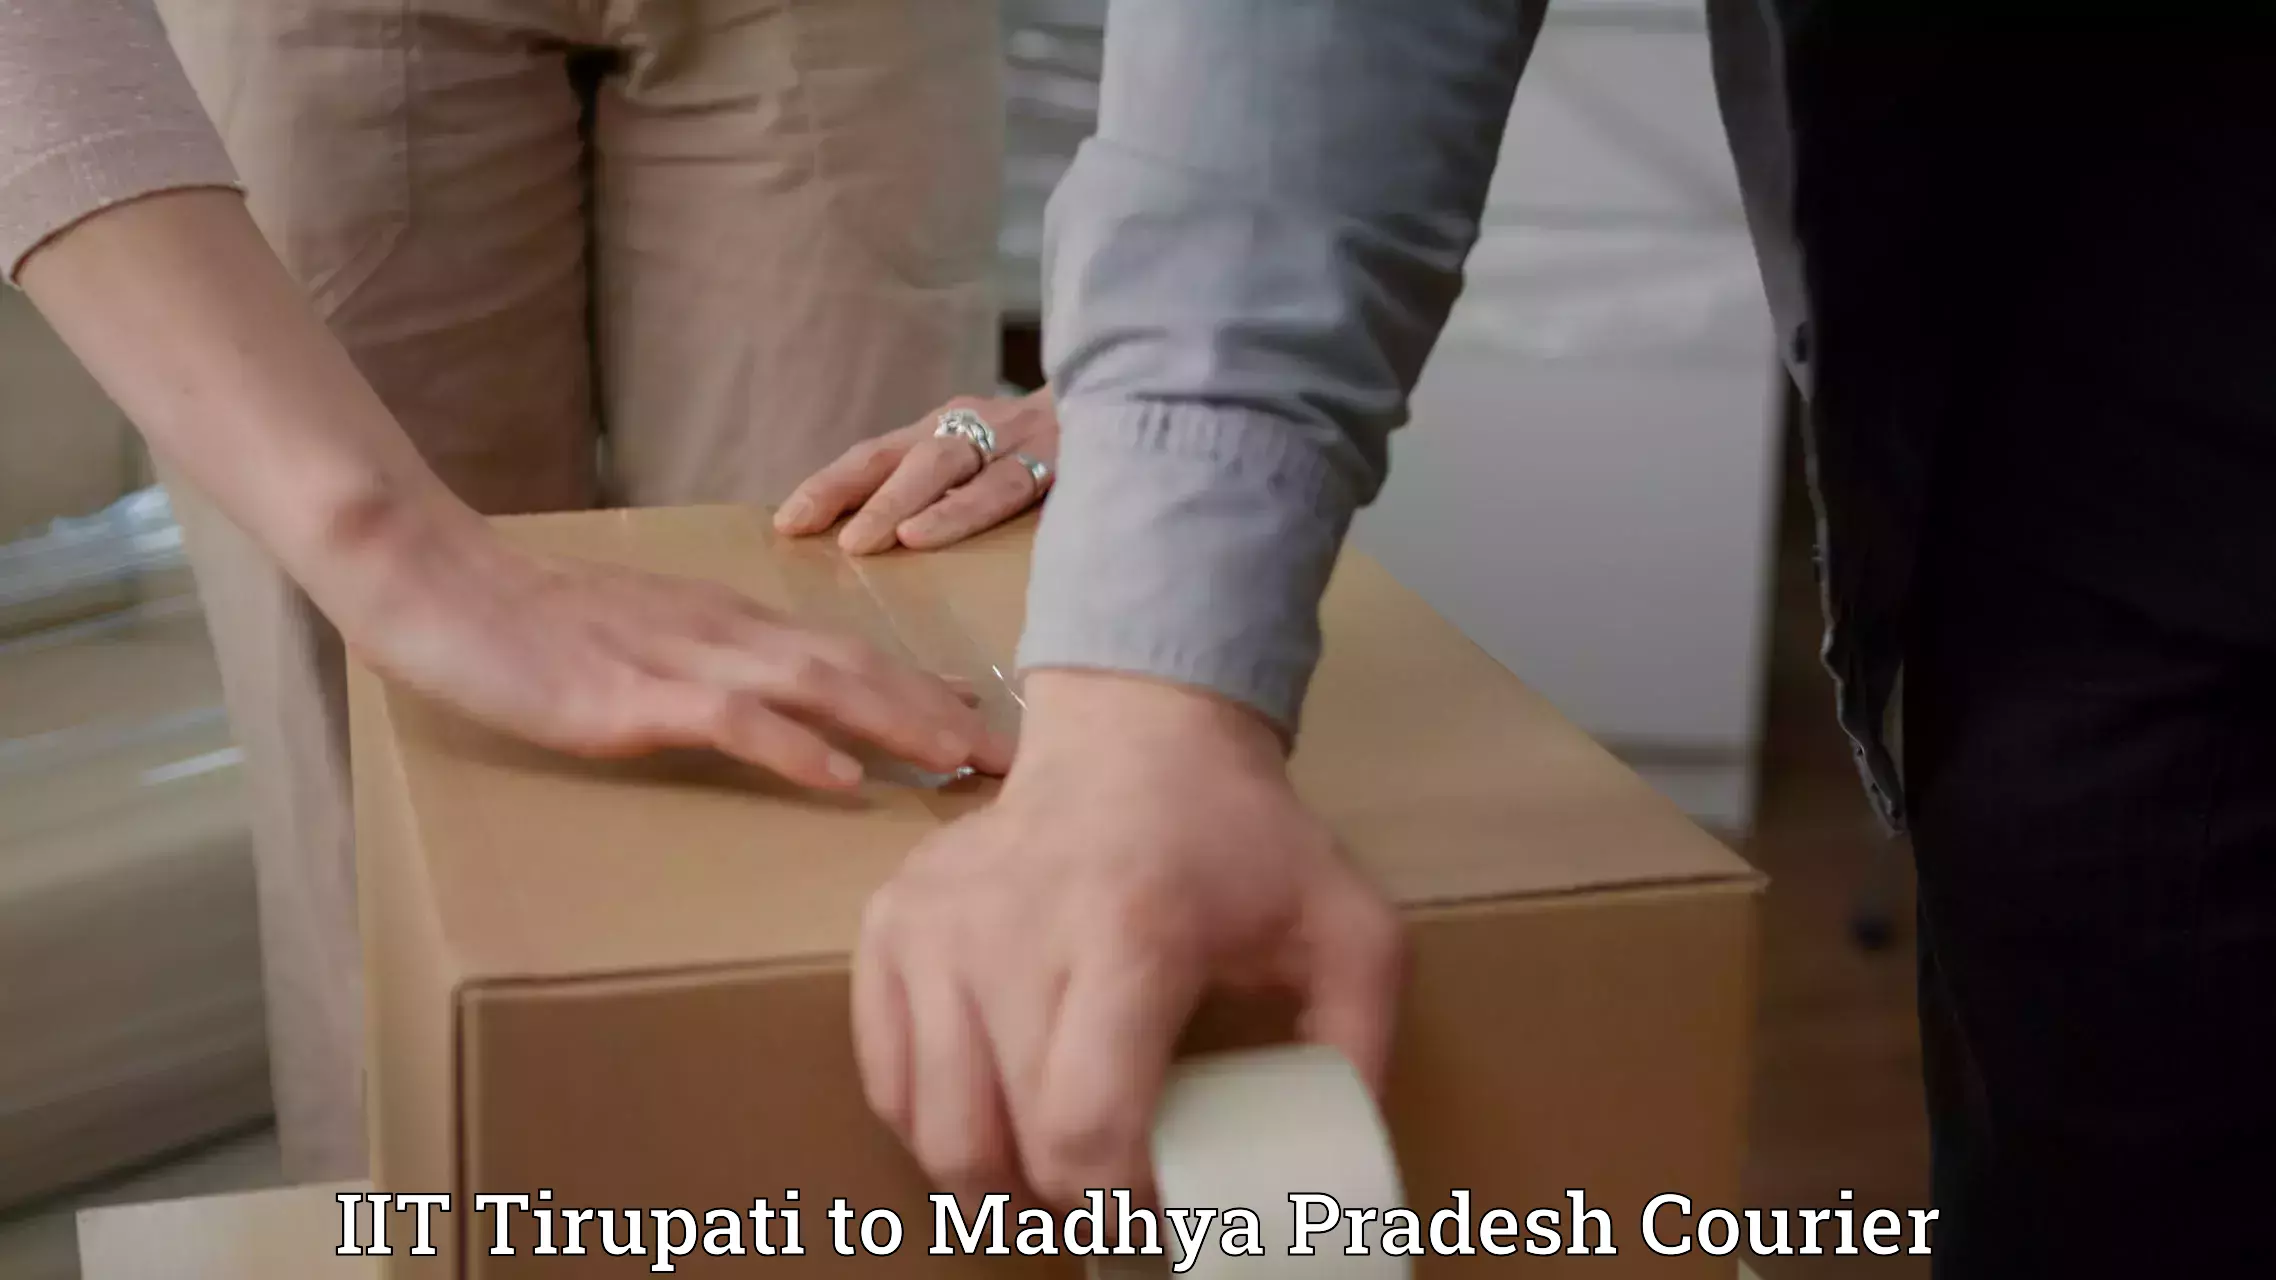 Speedy delivery service IIT Tirupati to Jatara